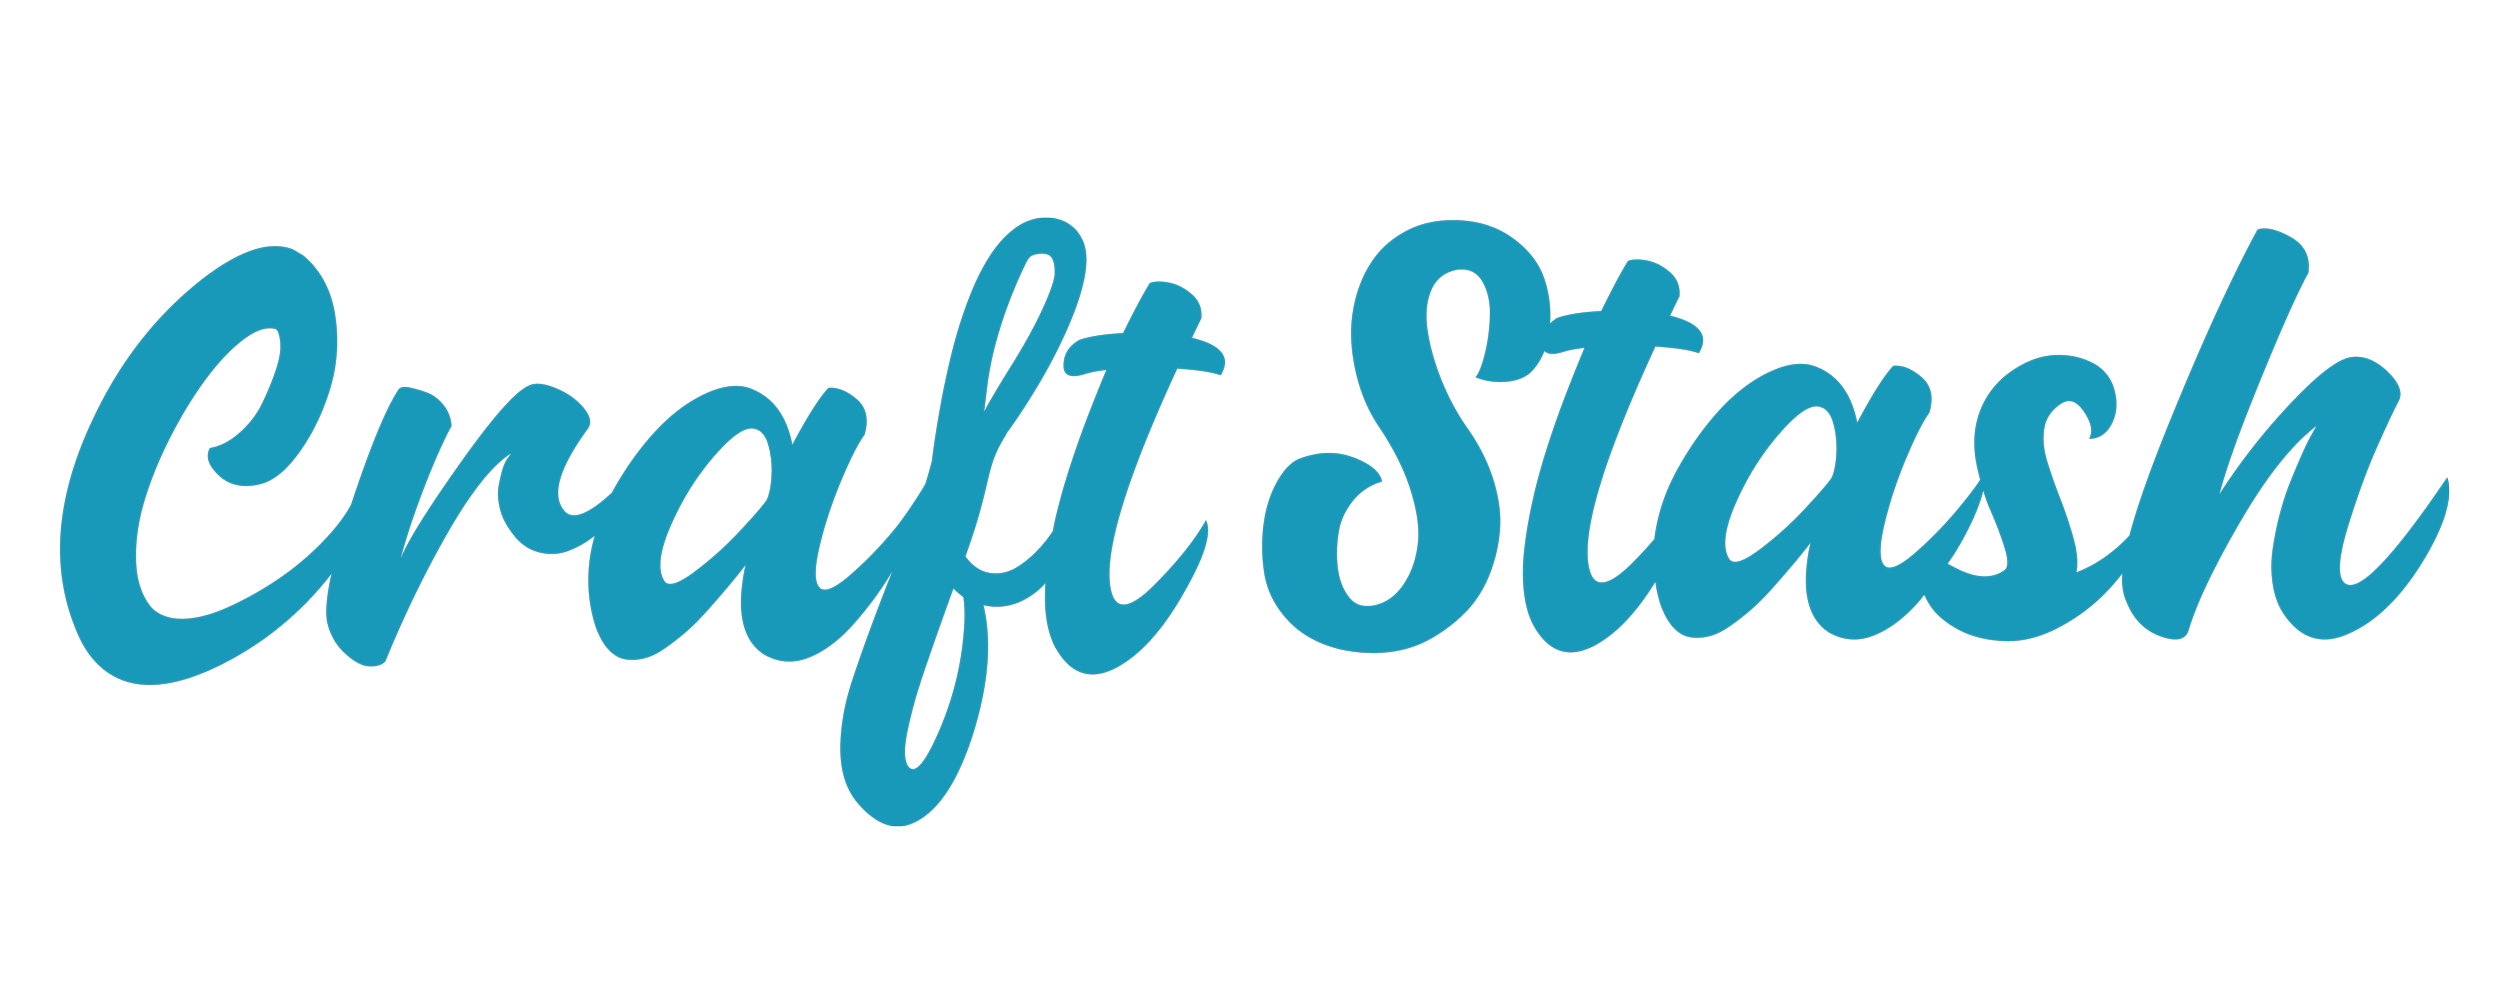 CraftStash_logo